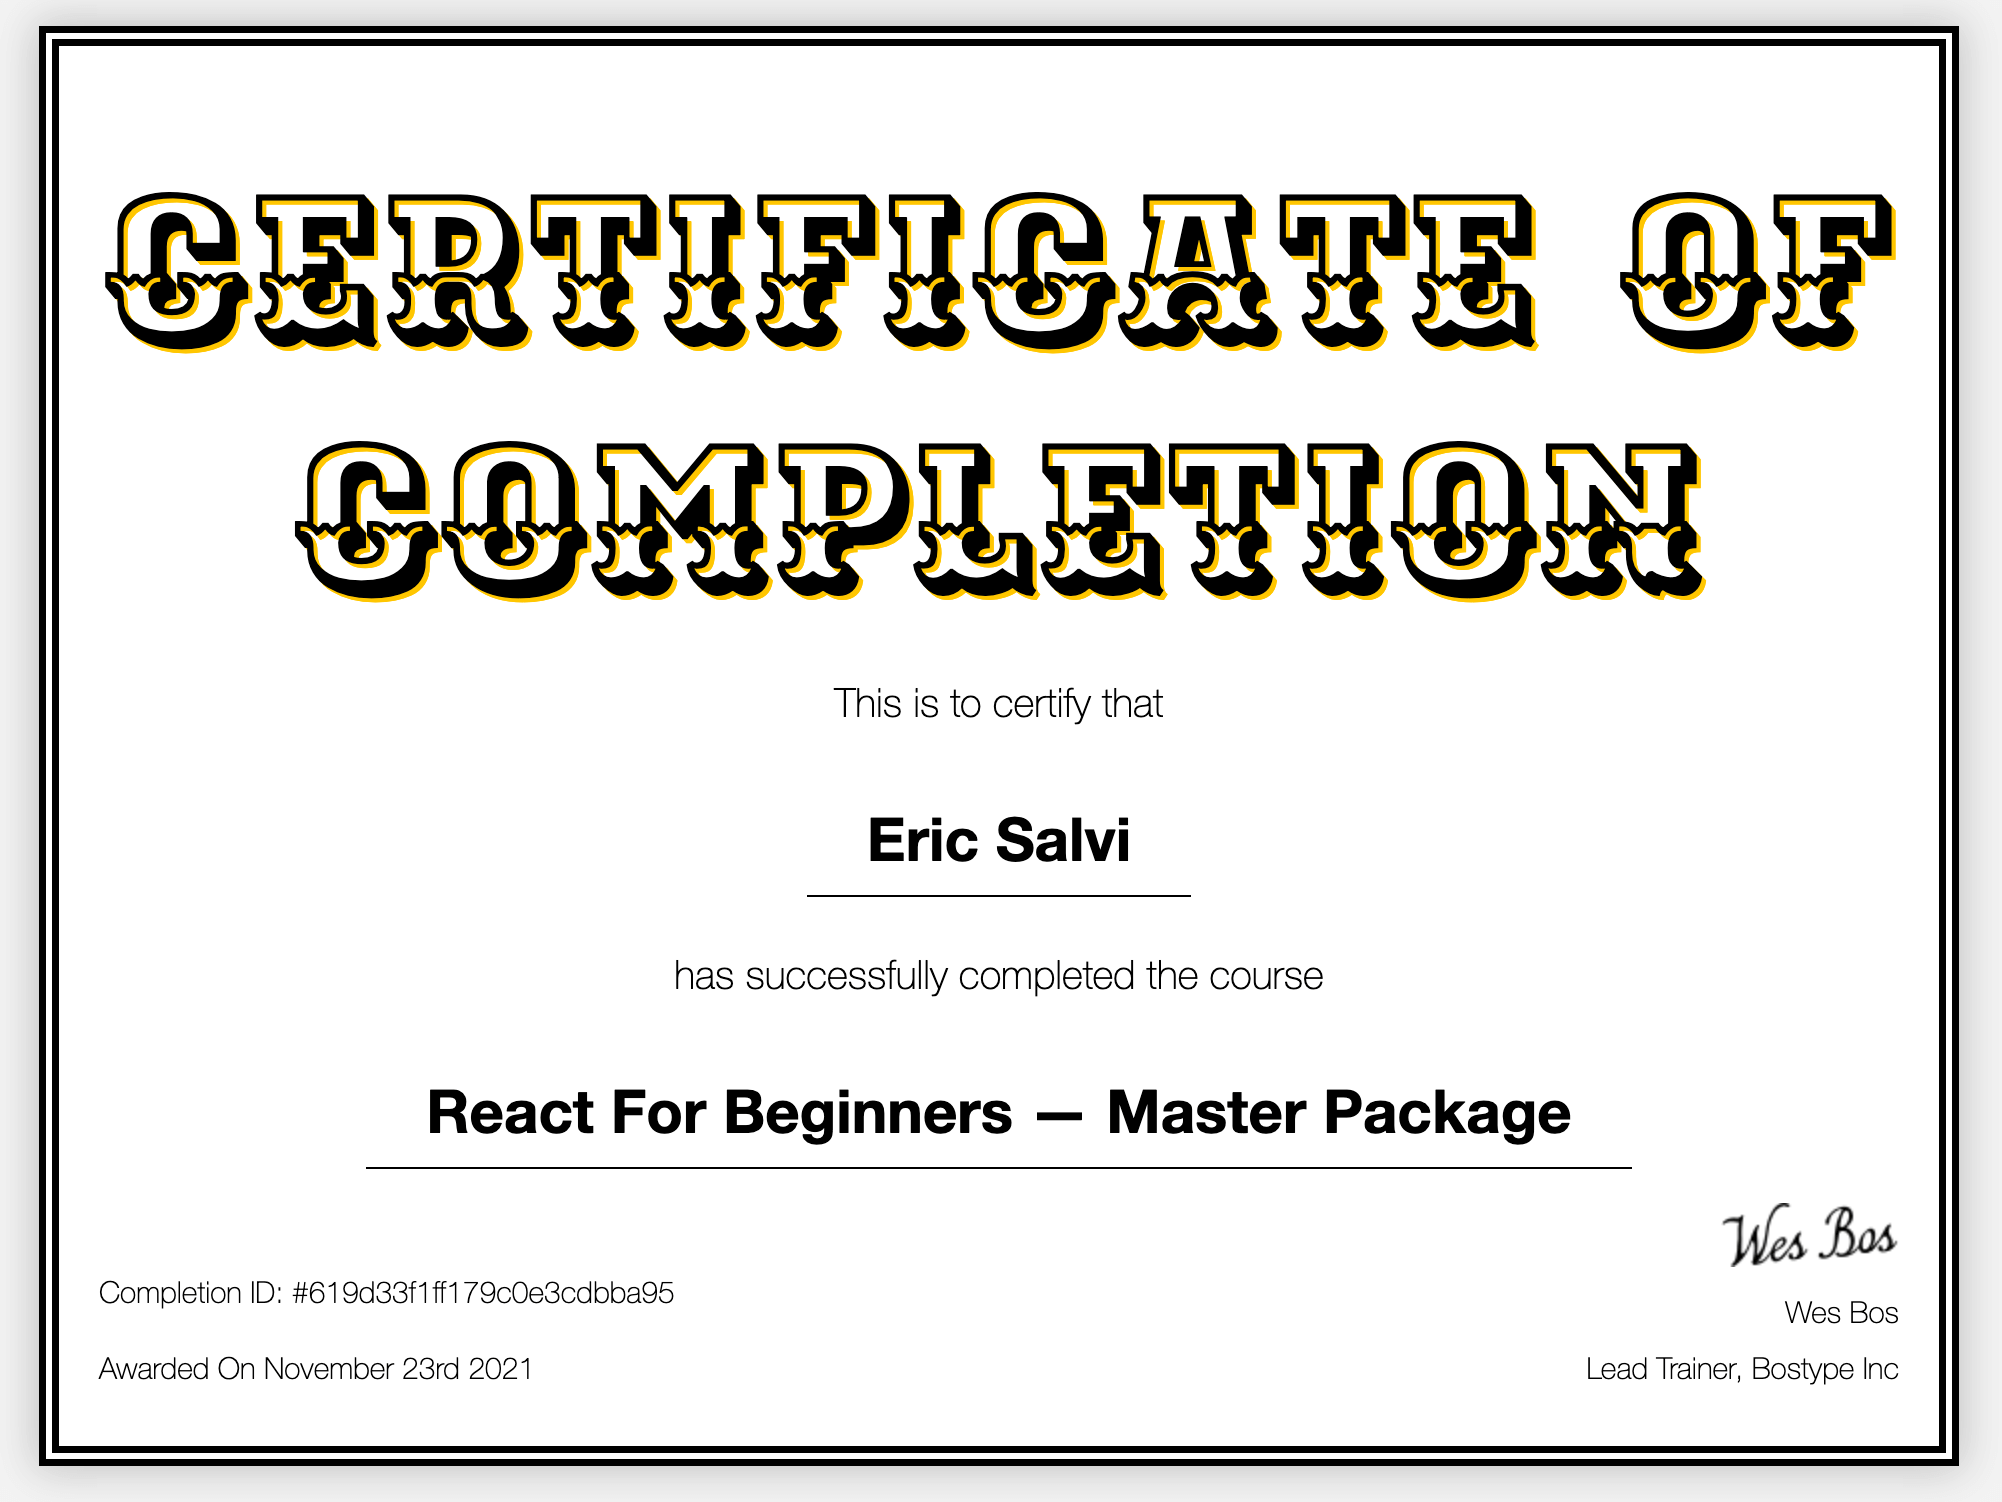 certification of react for beginners for Eric Salvi